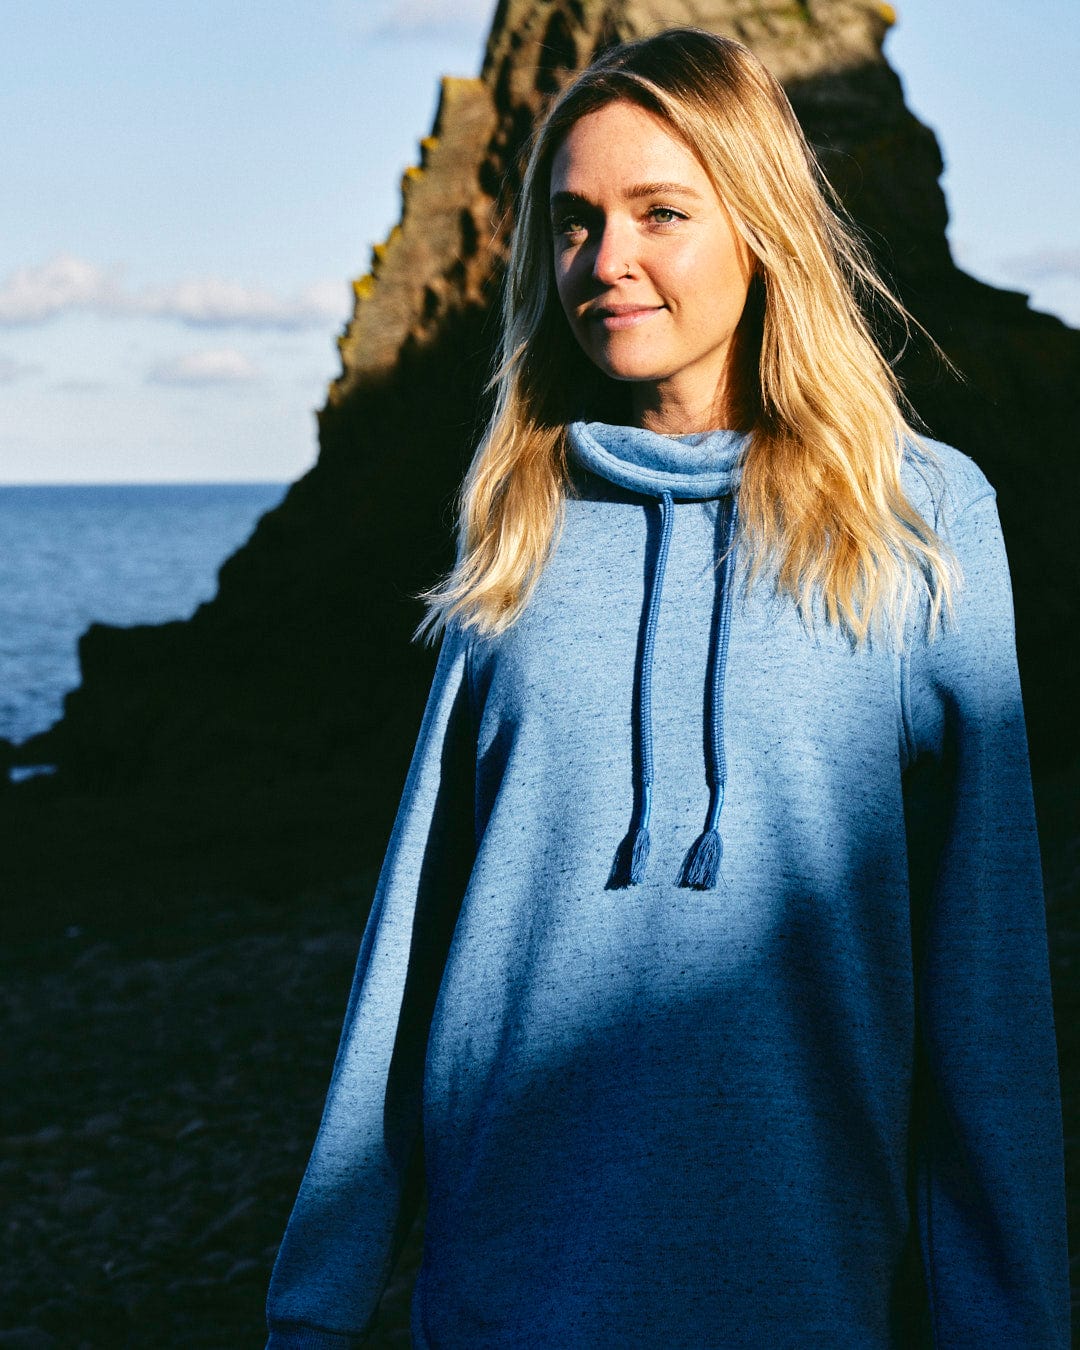 A chic woman in a Saltrock Harper - Womens Longline Pop Sweat - Light Blue hoodie standing by the ocean, exuding comfort.